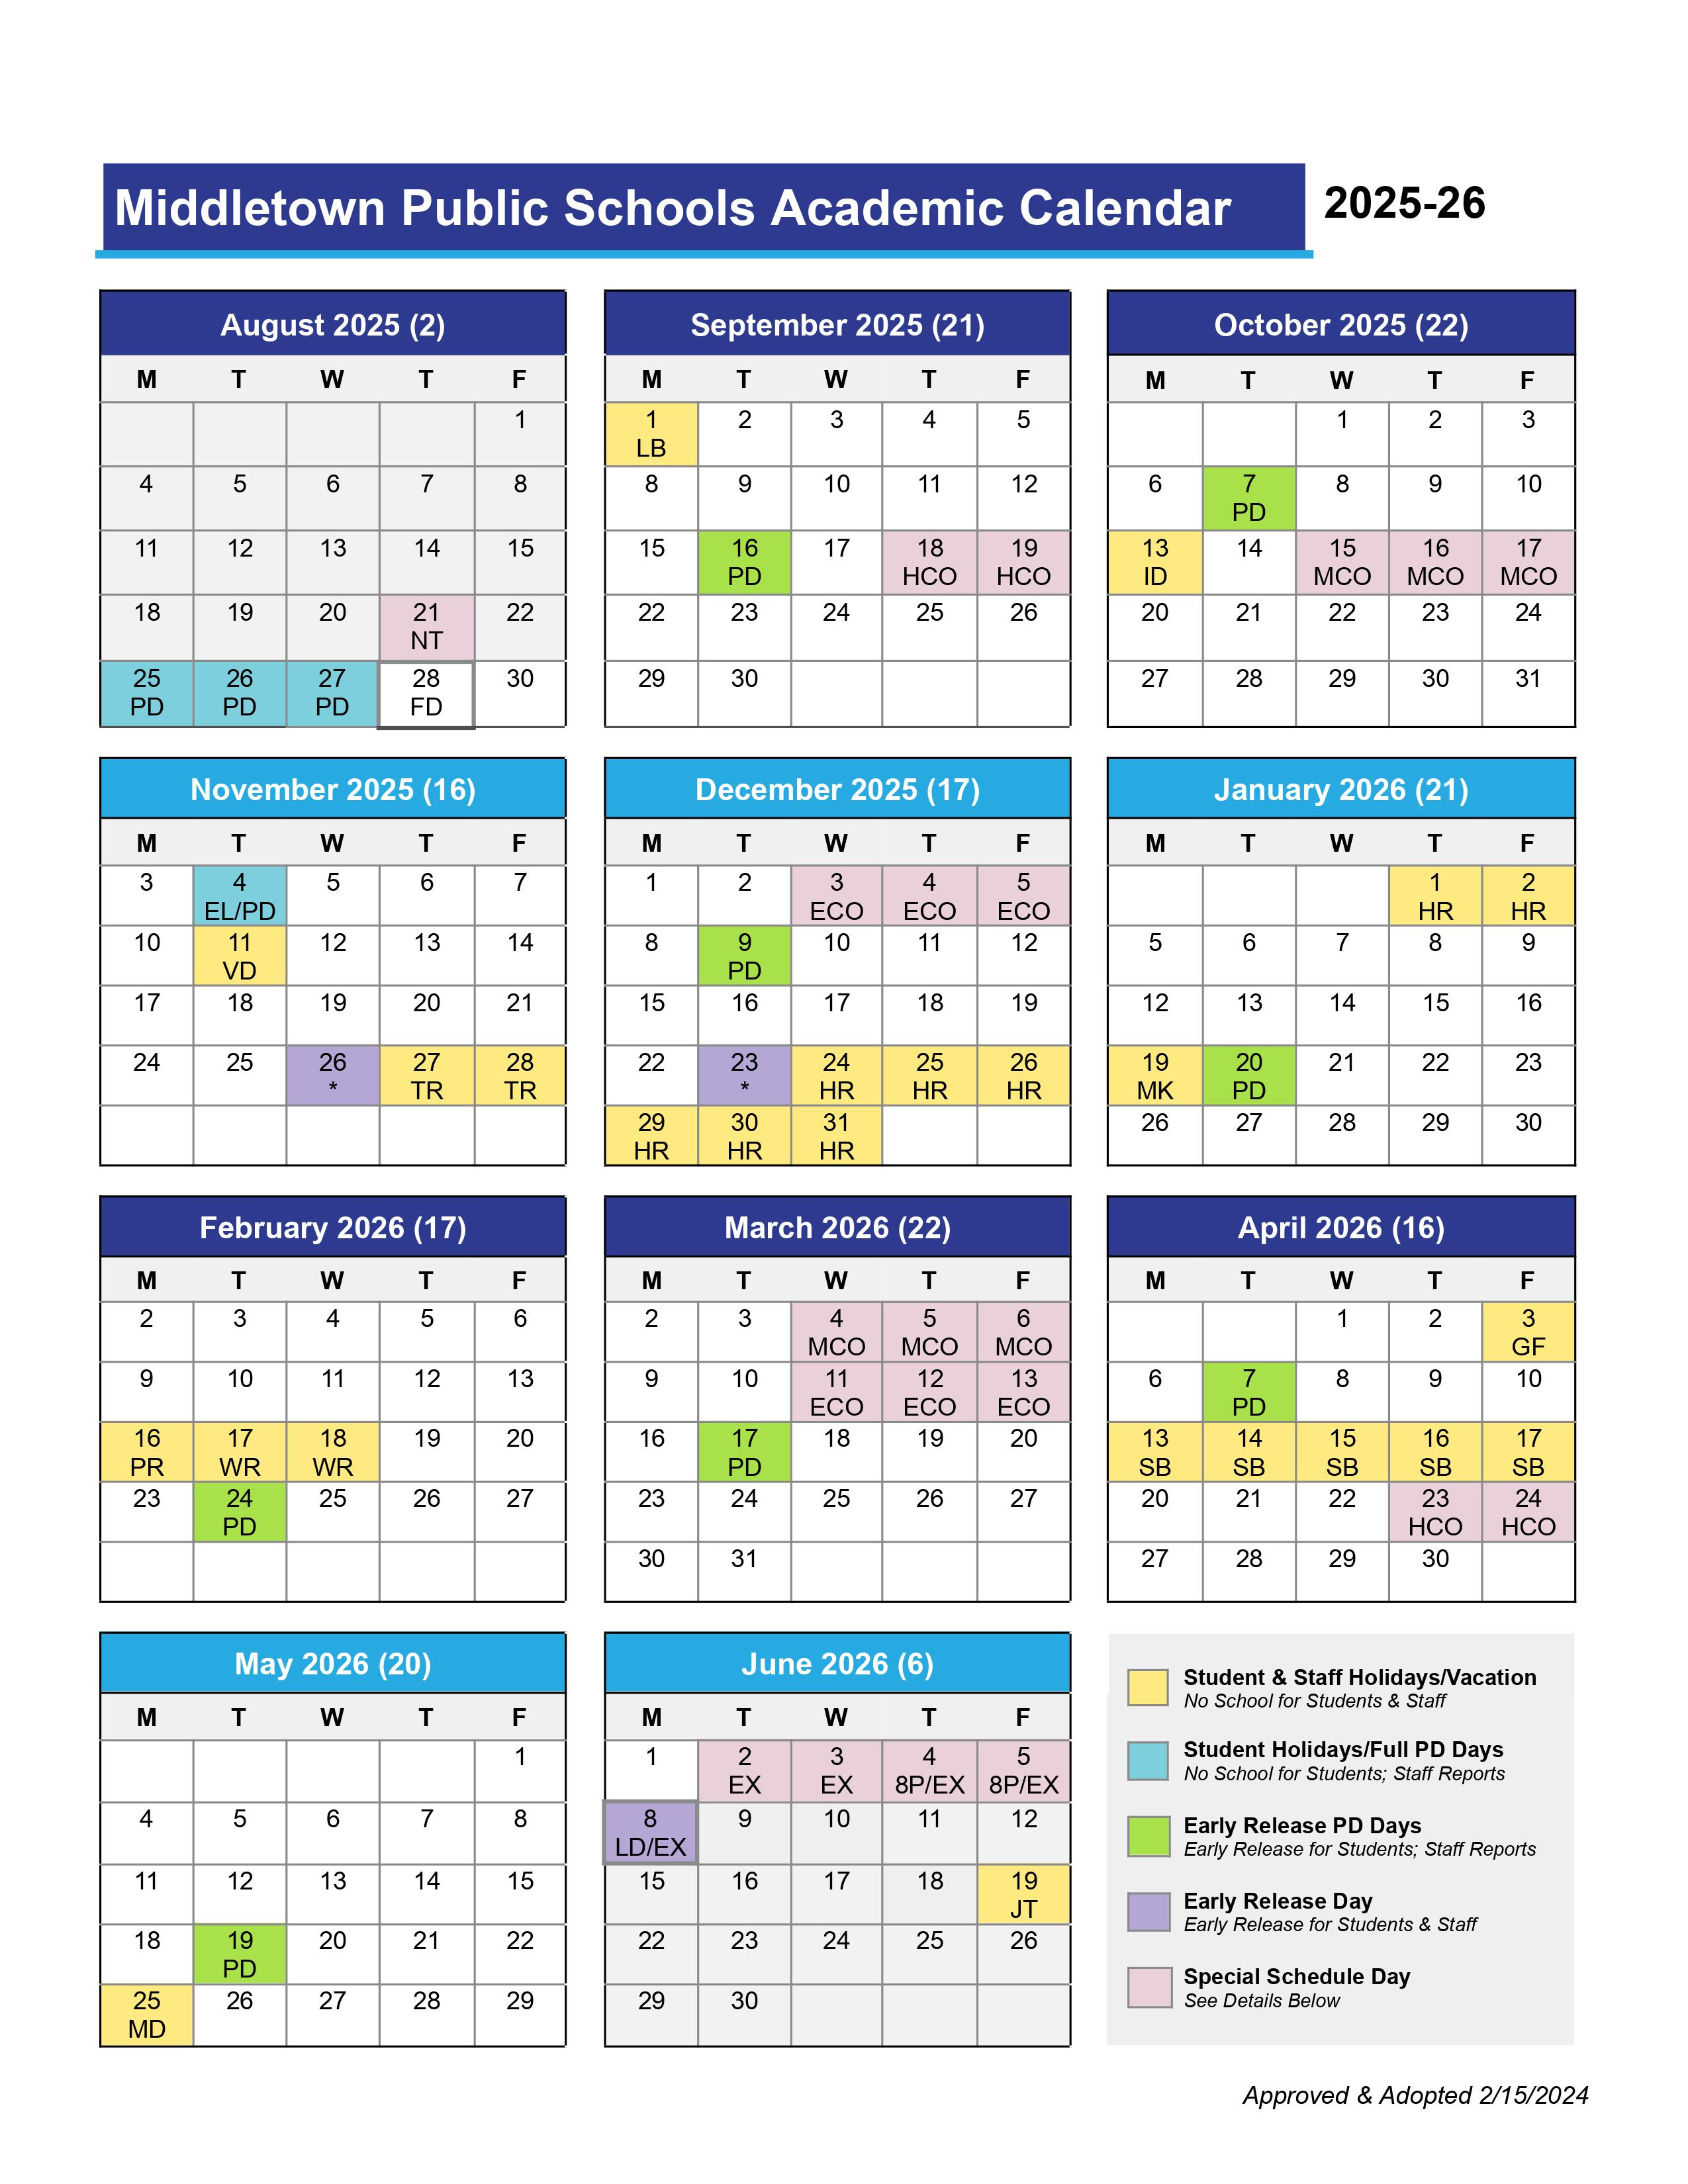 2025-2026 Academic Calendar